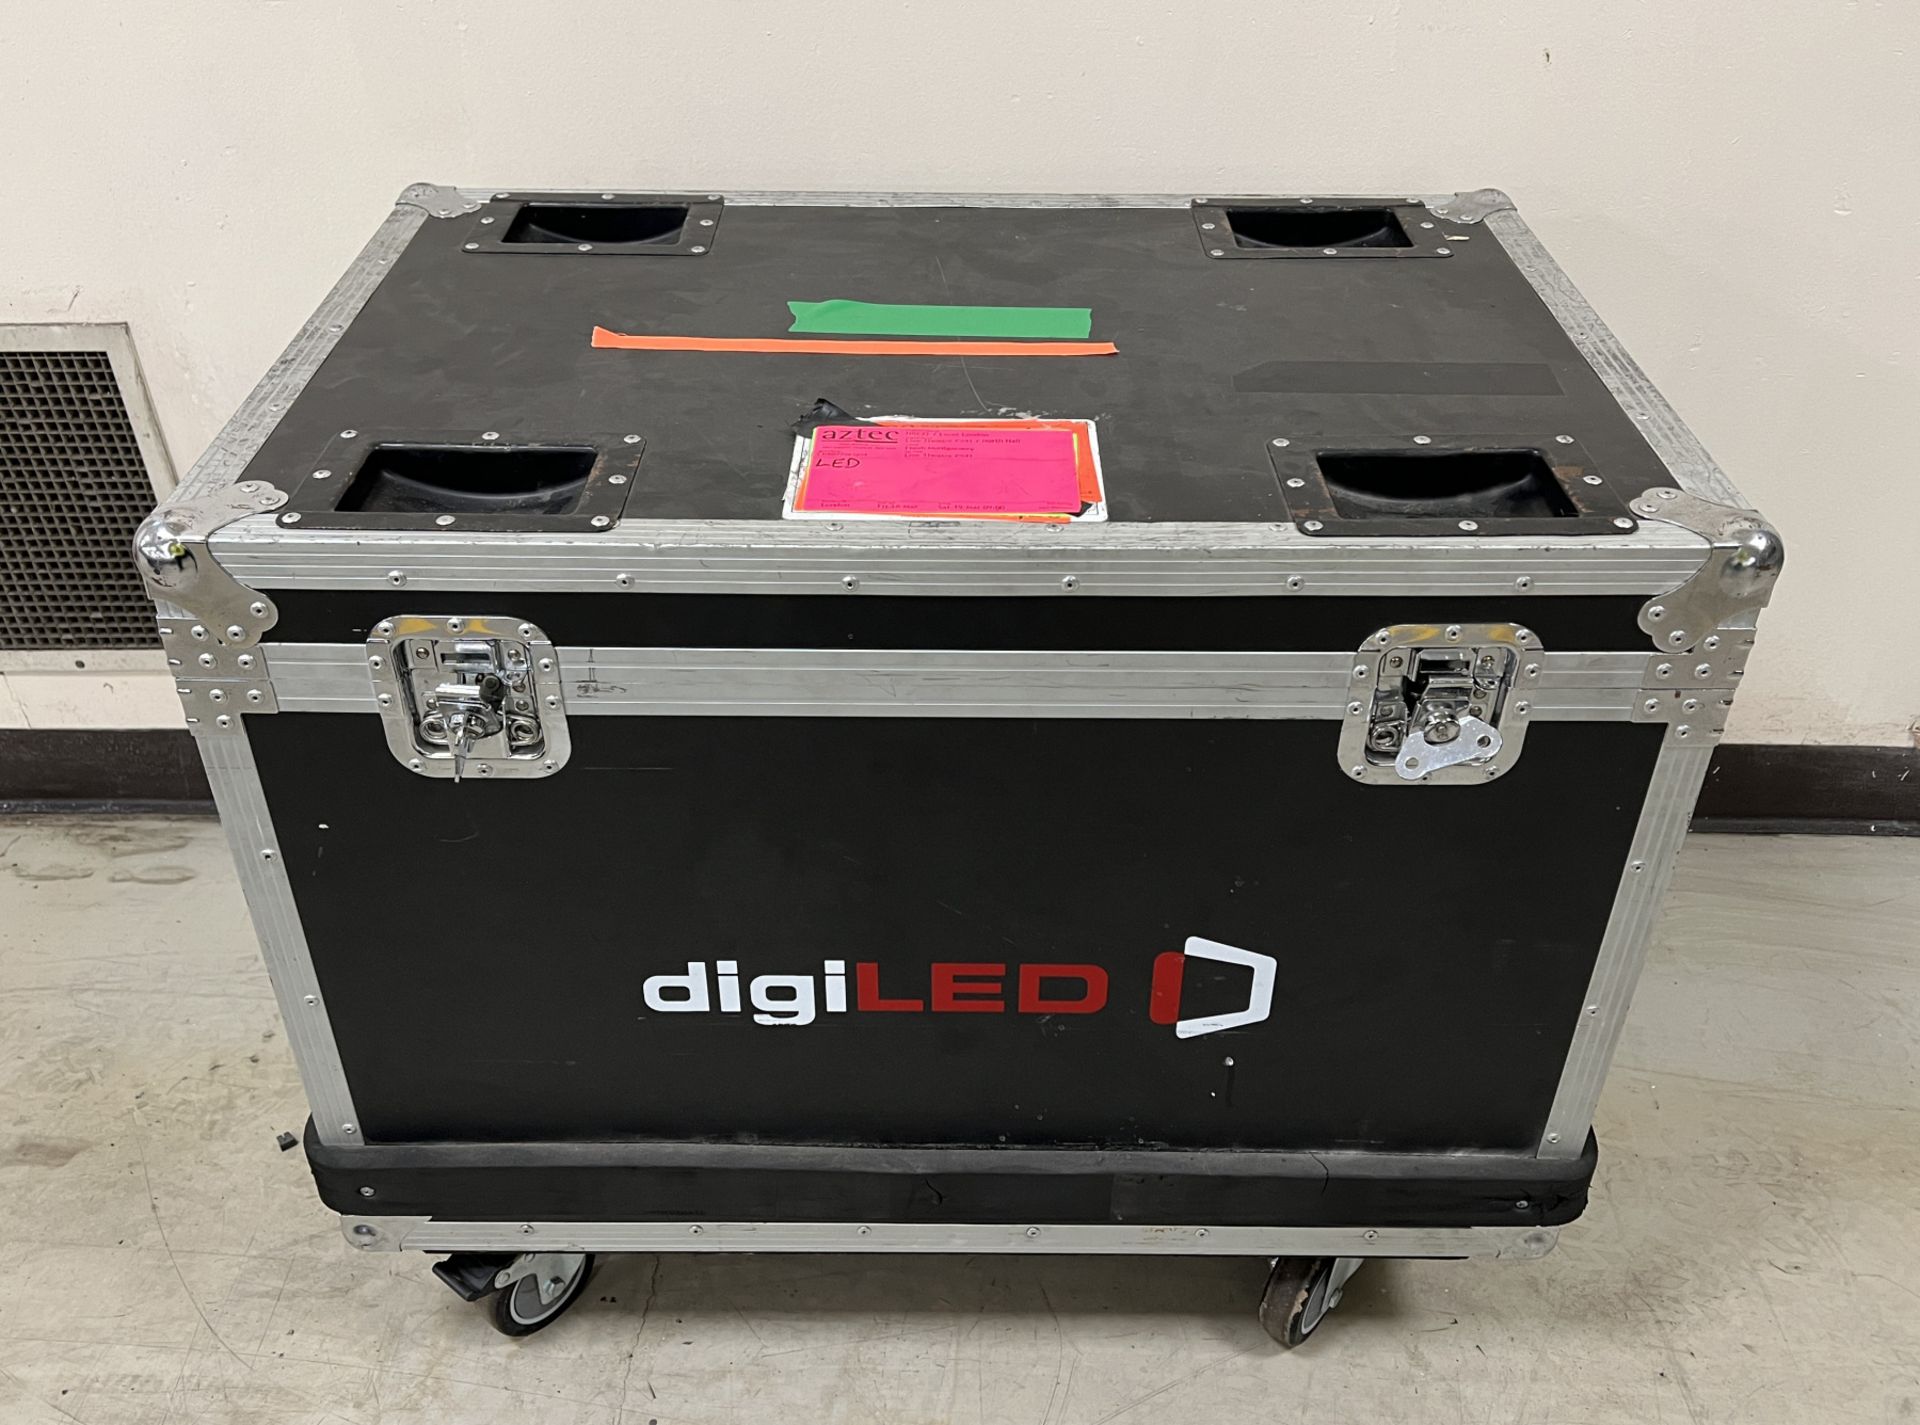 Digi LED HRI3900 kit - 120 LED tiles housed in 20 wheeled flight cases - see description for details - Image 80 of 196